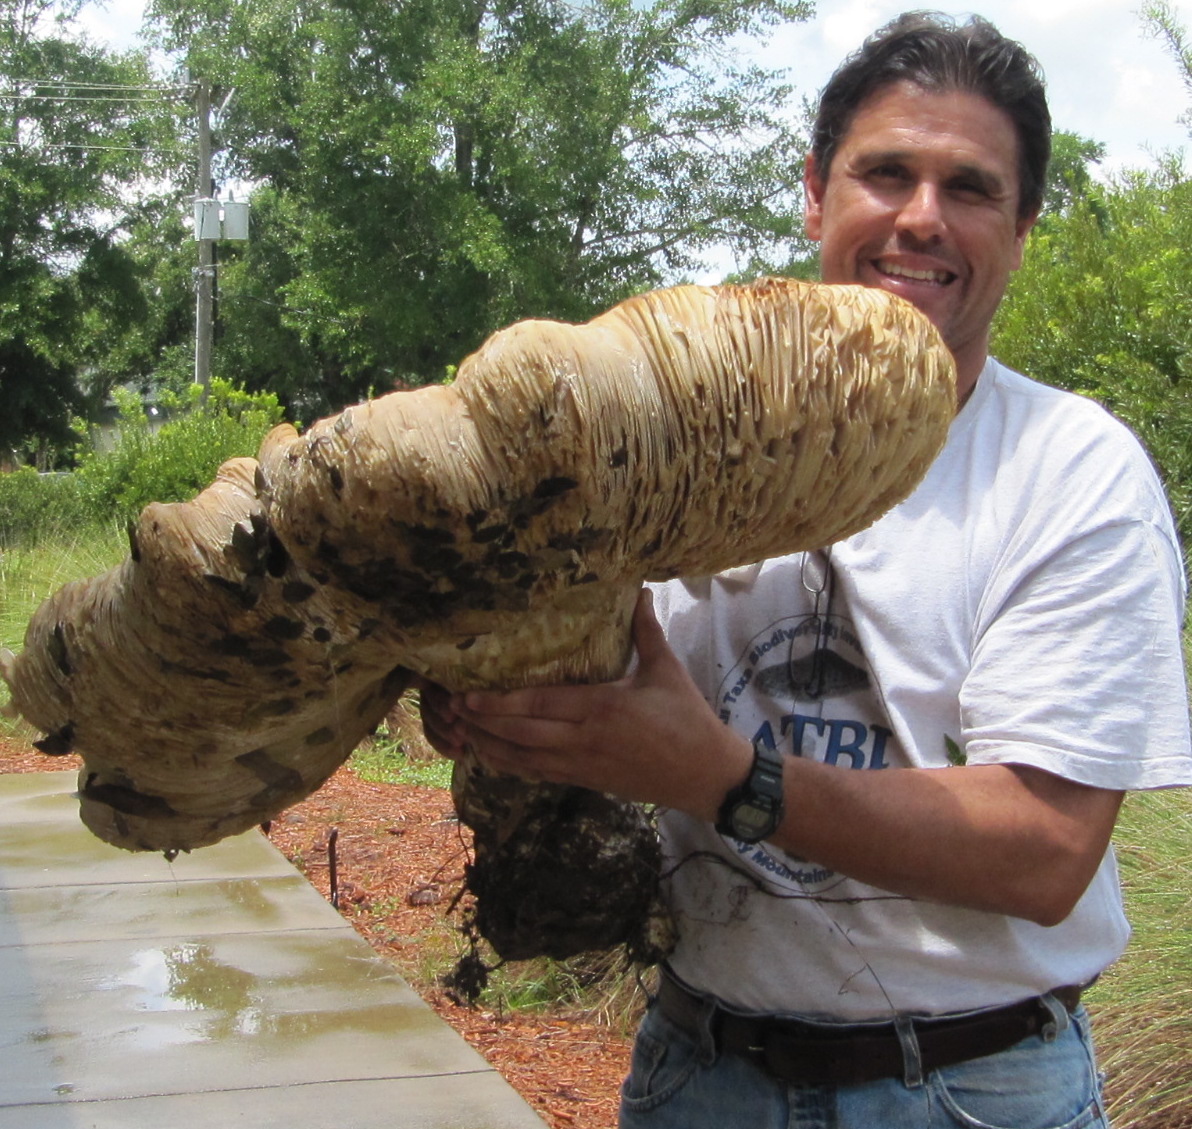 Dr. Mata holding a large mushroom